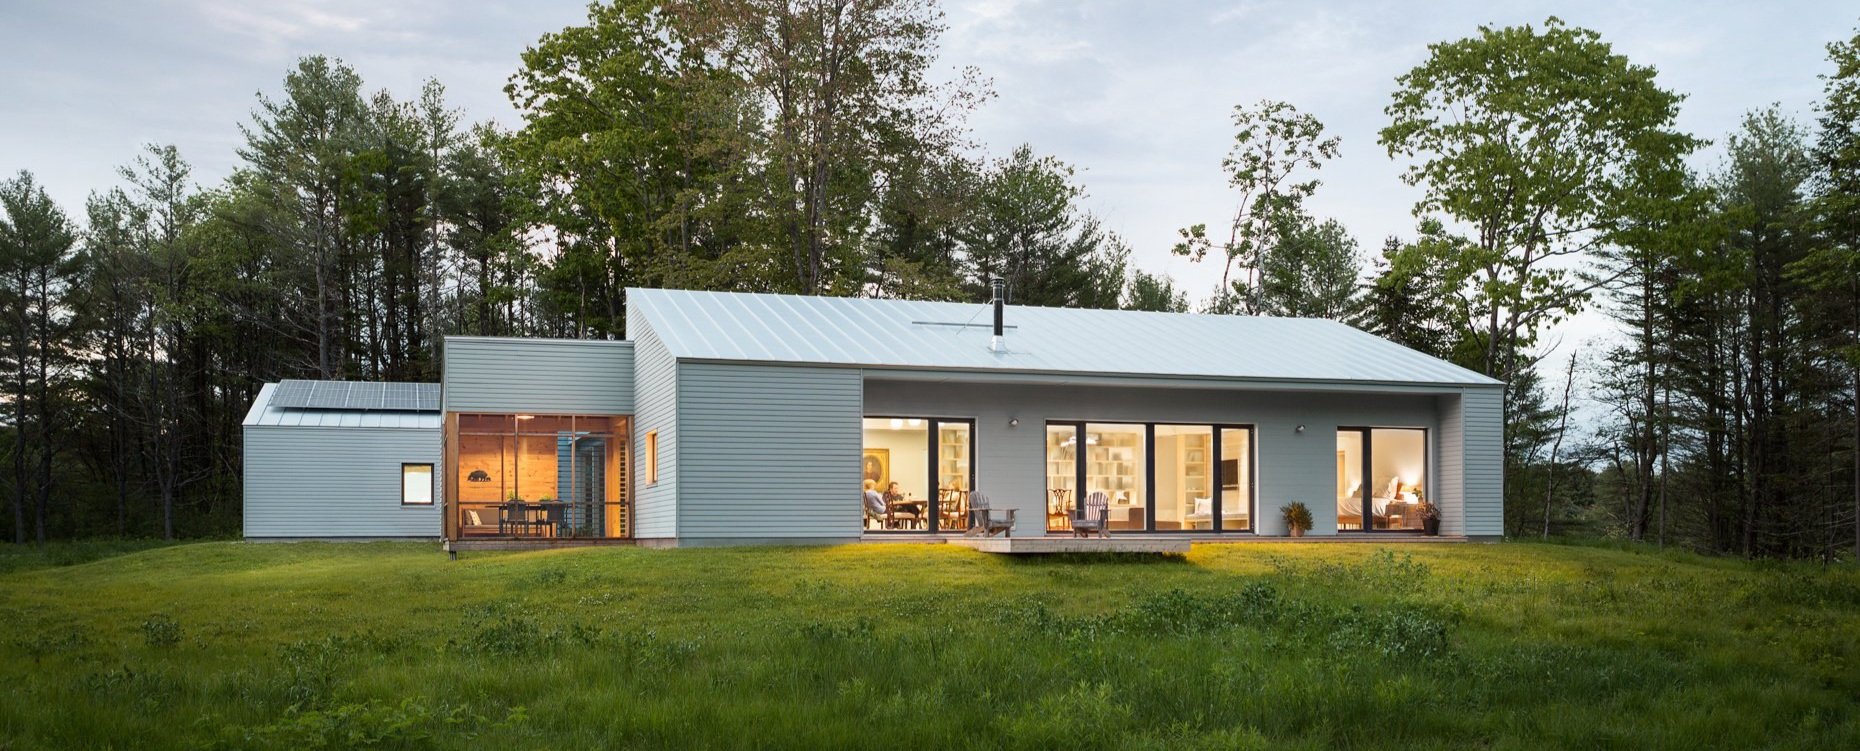 Architect-Designed Modern Green prefab tiny house kit home - Ecohome